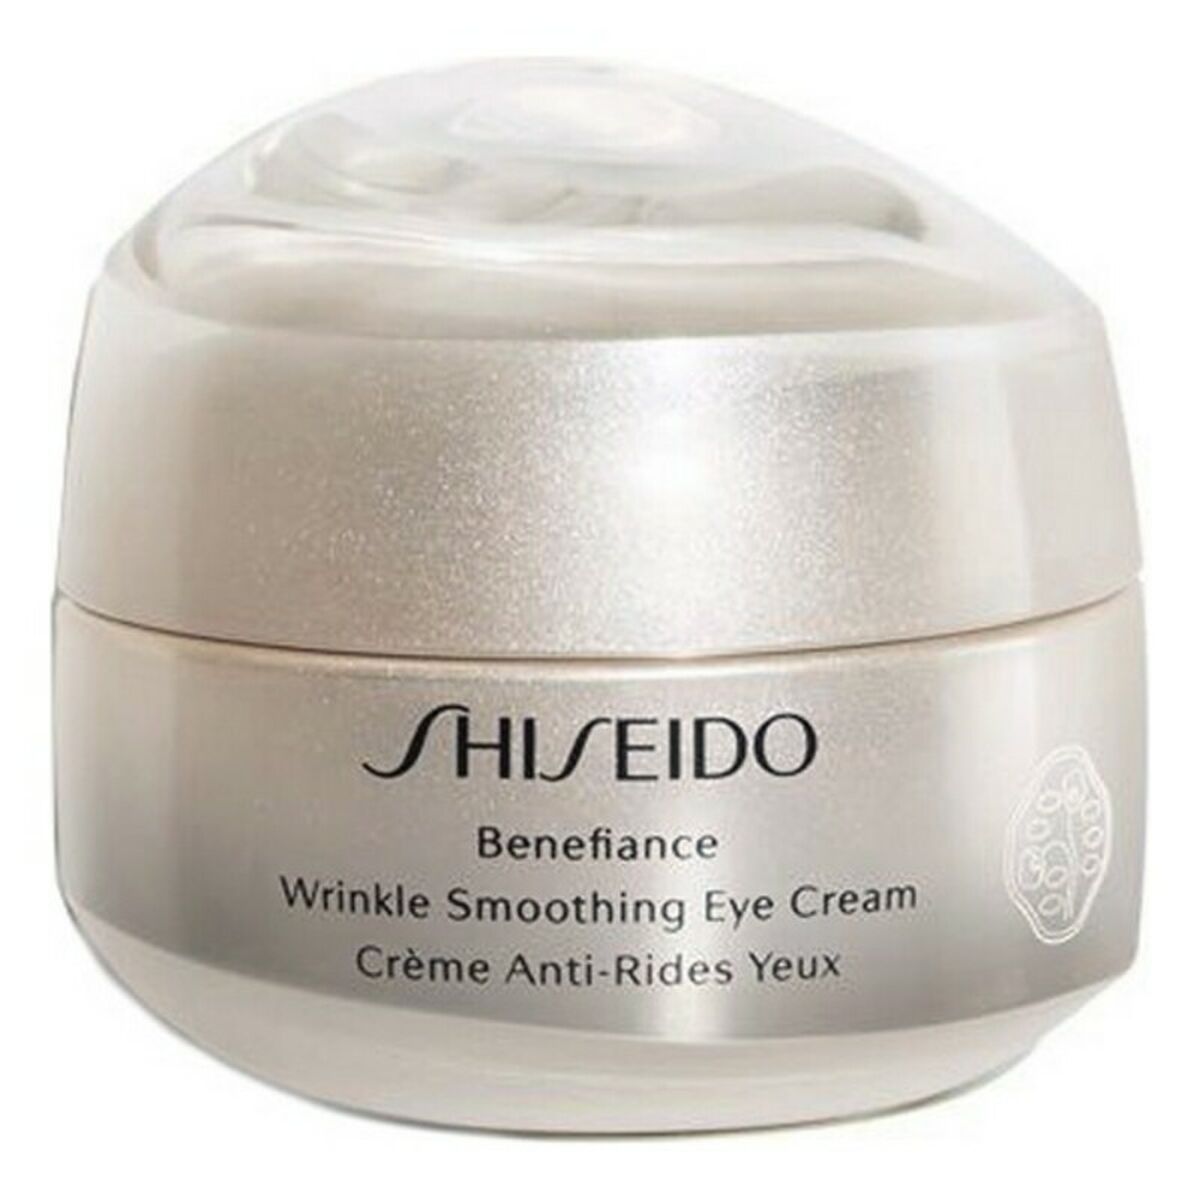 Contour des yeux Benefiance Wrinkle Smoothing Shiseido (15 ml)